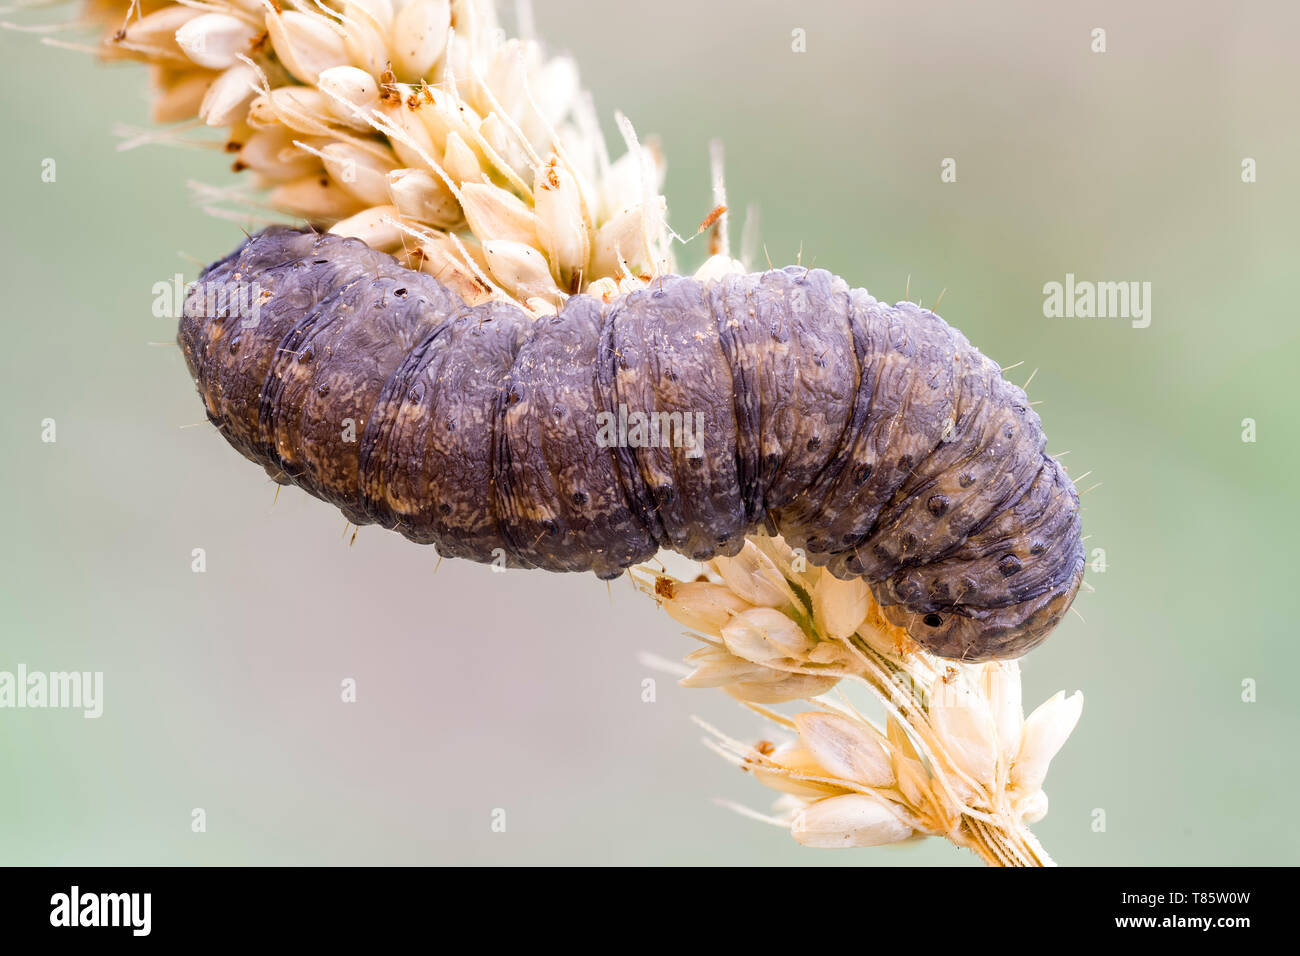 Caterpillar sobre hierba foxtail Foto de stock